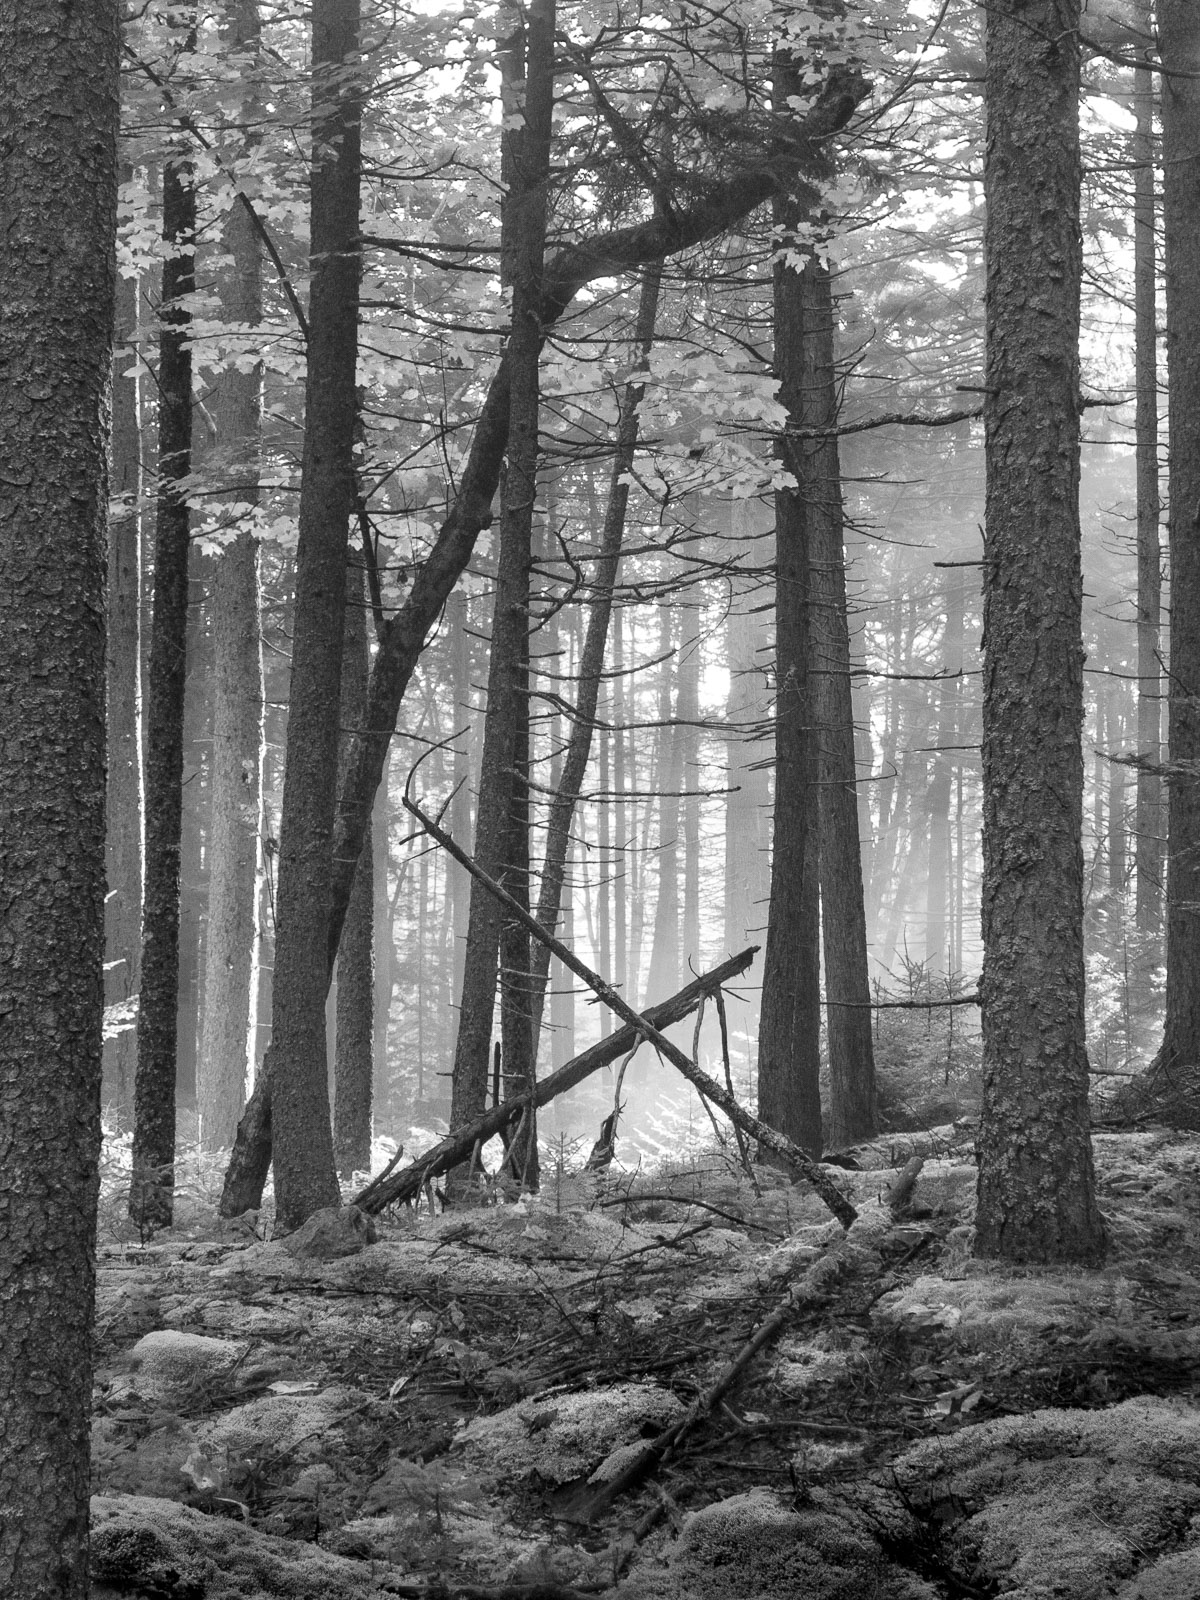 Forest scene